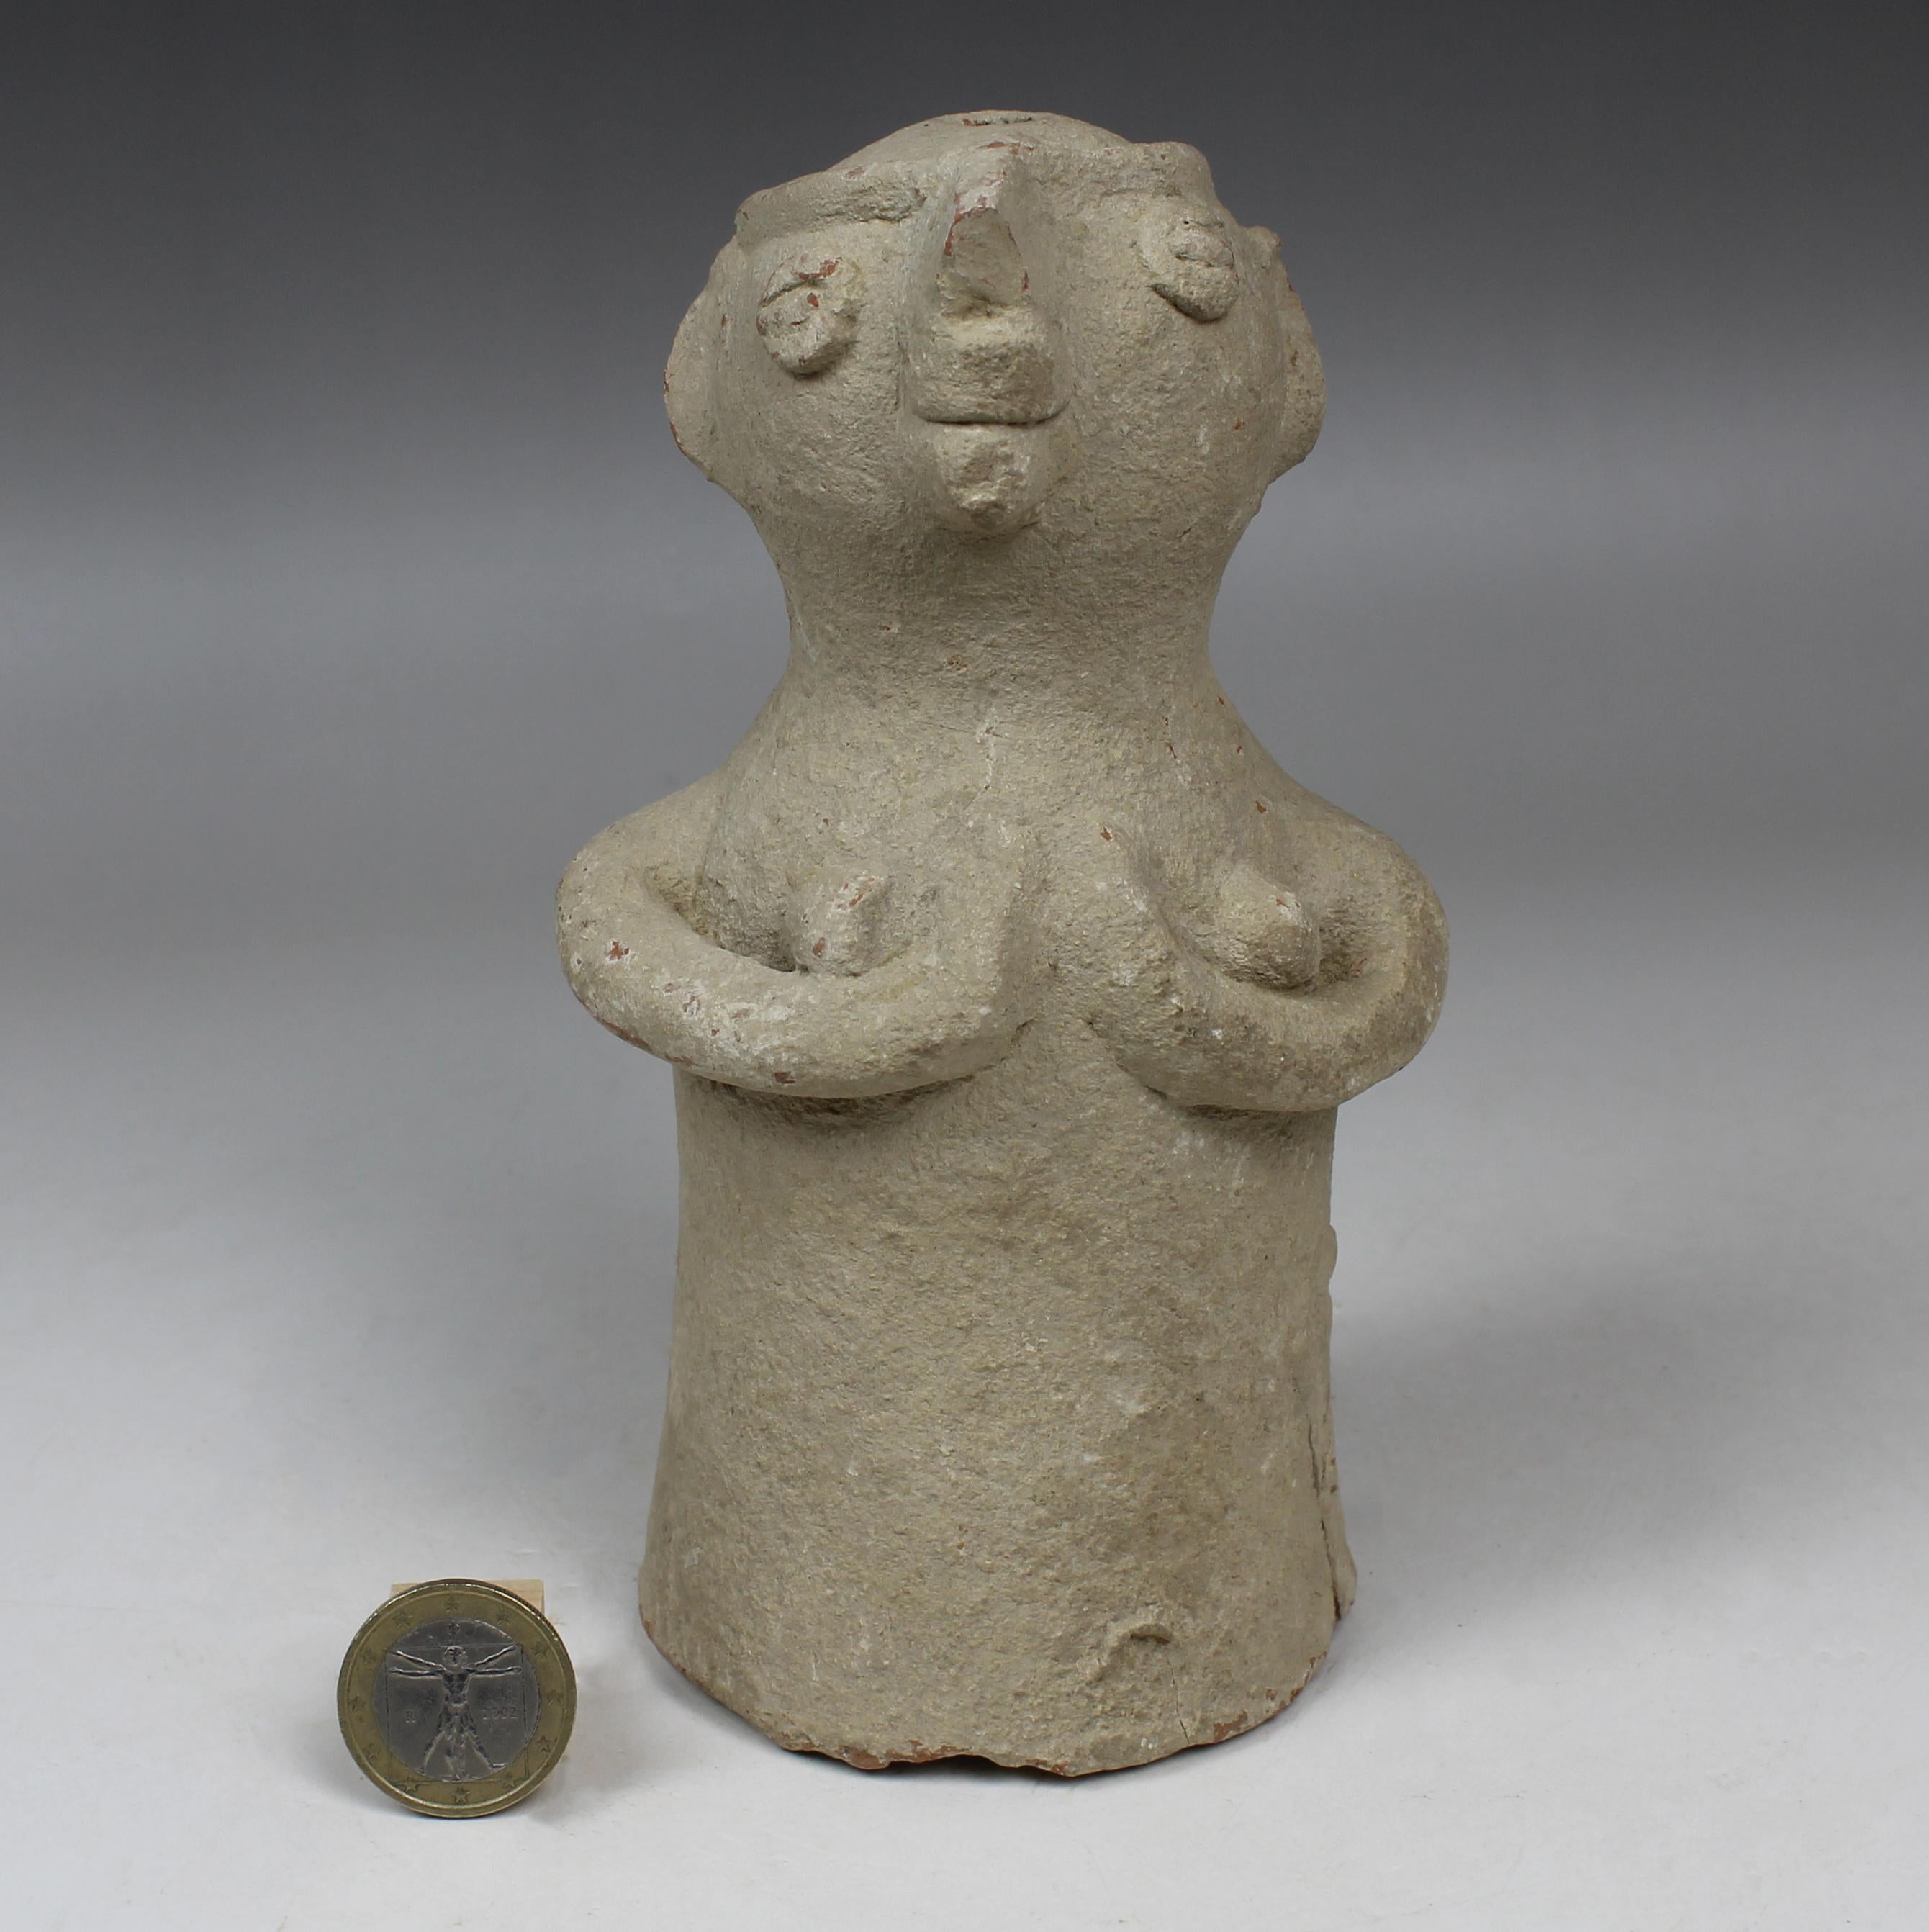 stone age fertility goddess